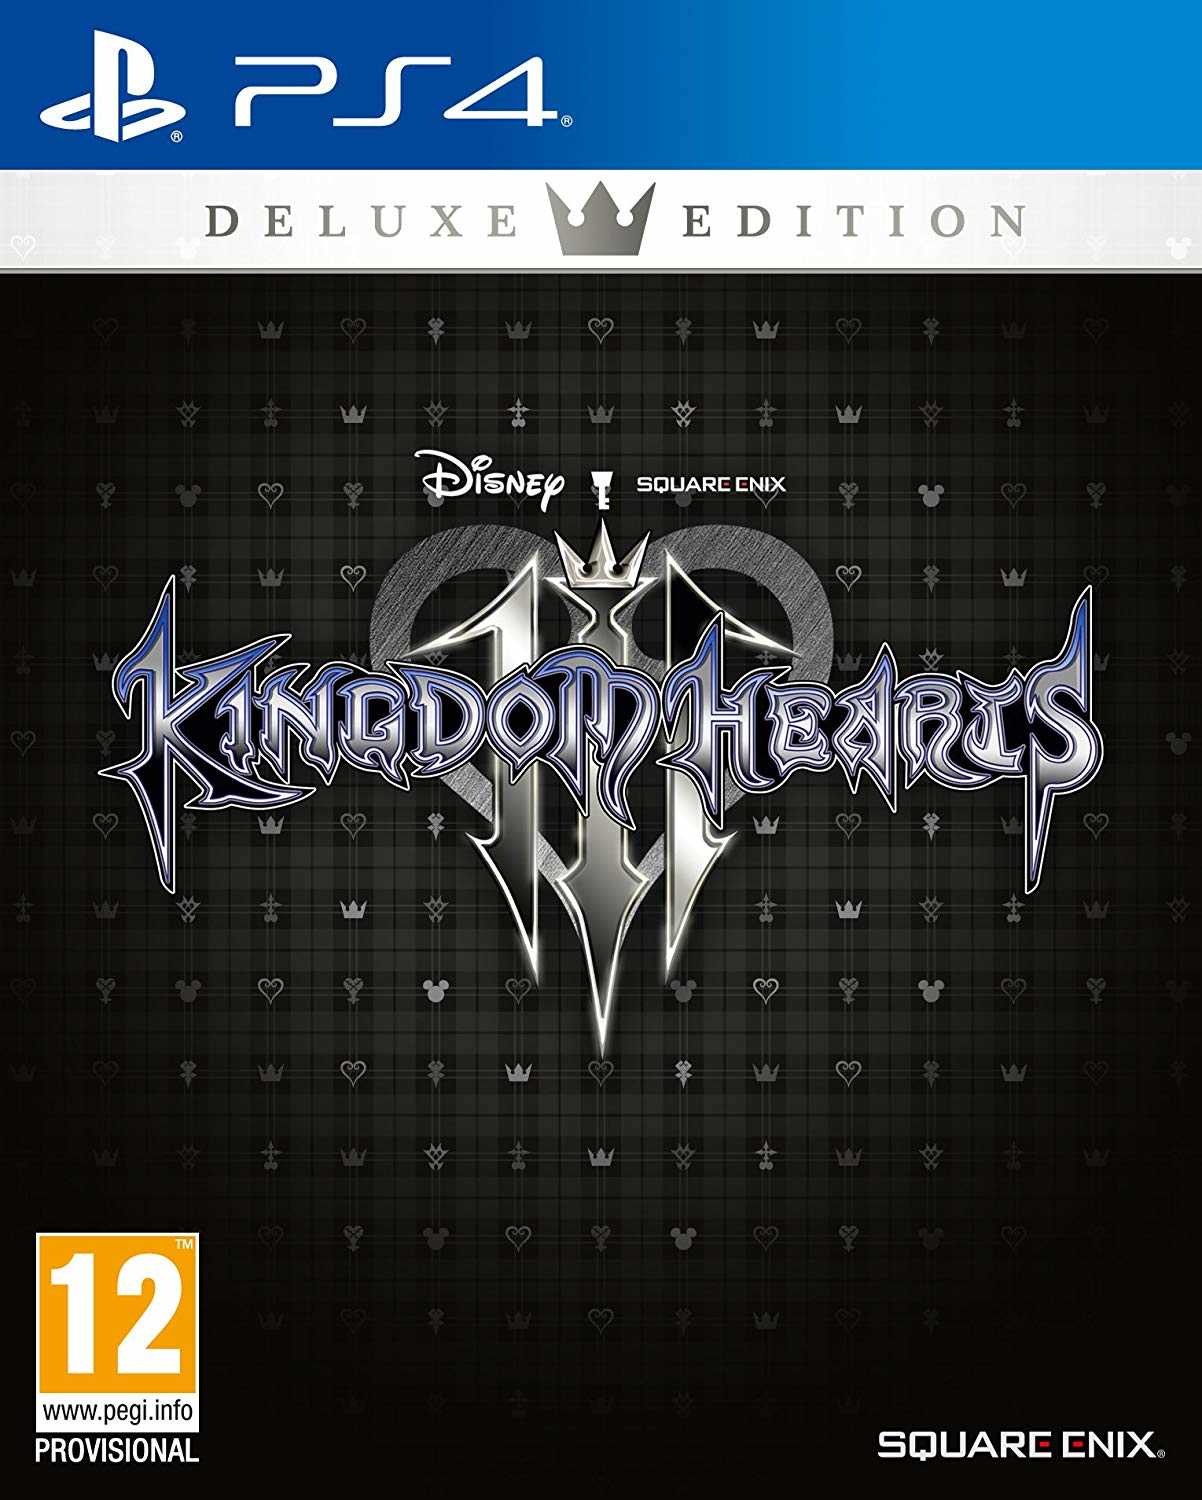 PS4 - Kingdom Hearts 3 Deluxe Edition